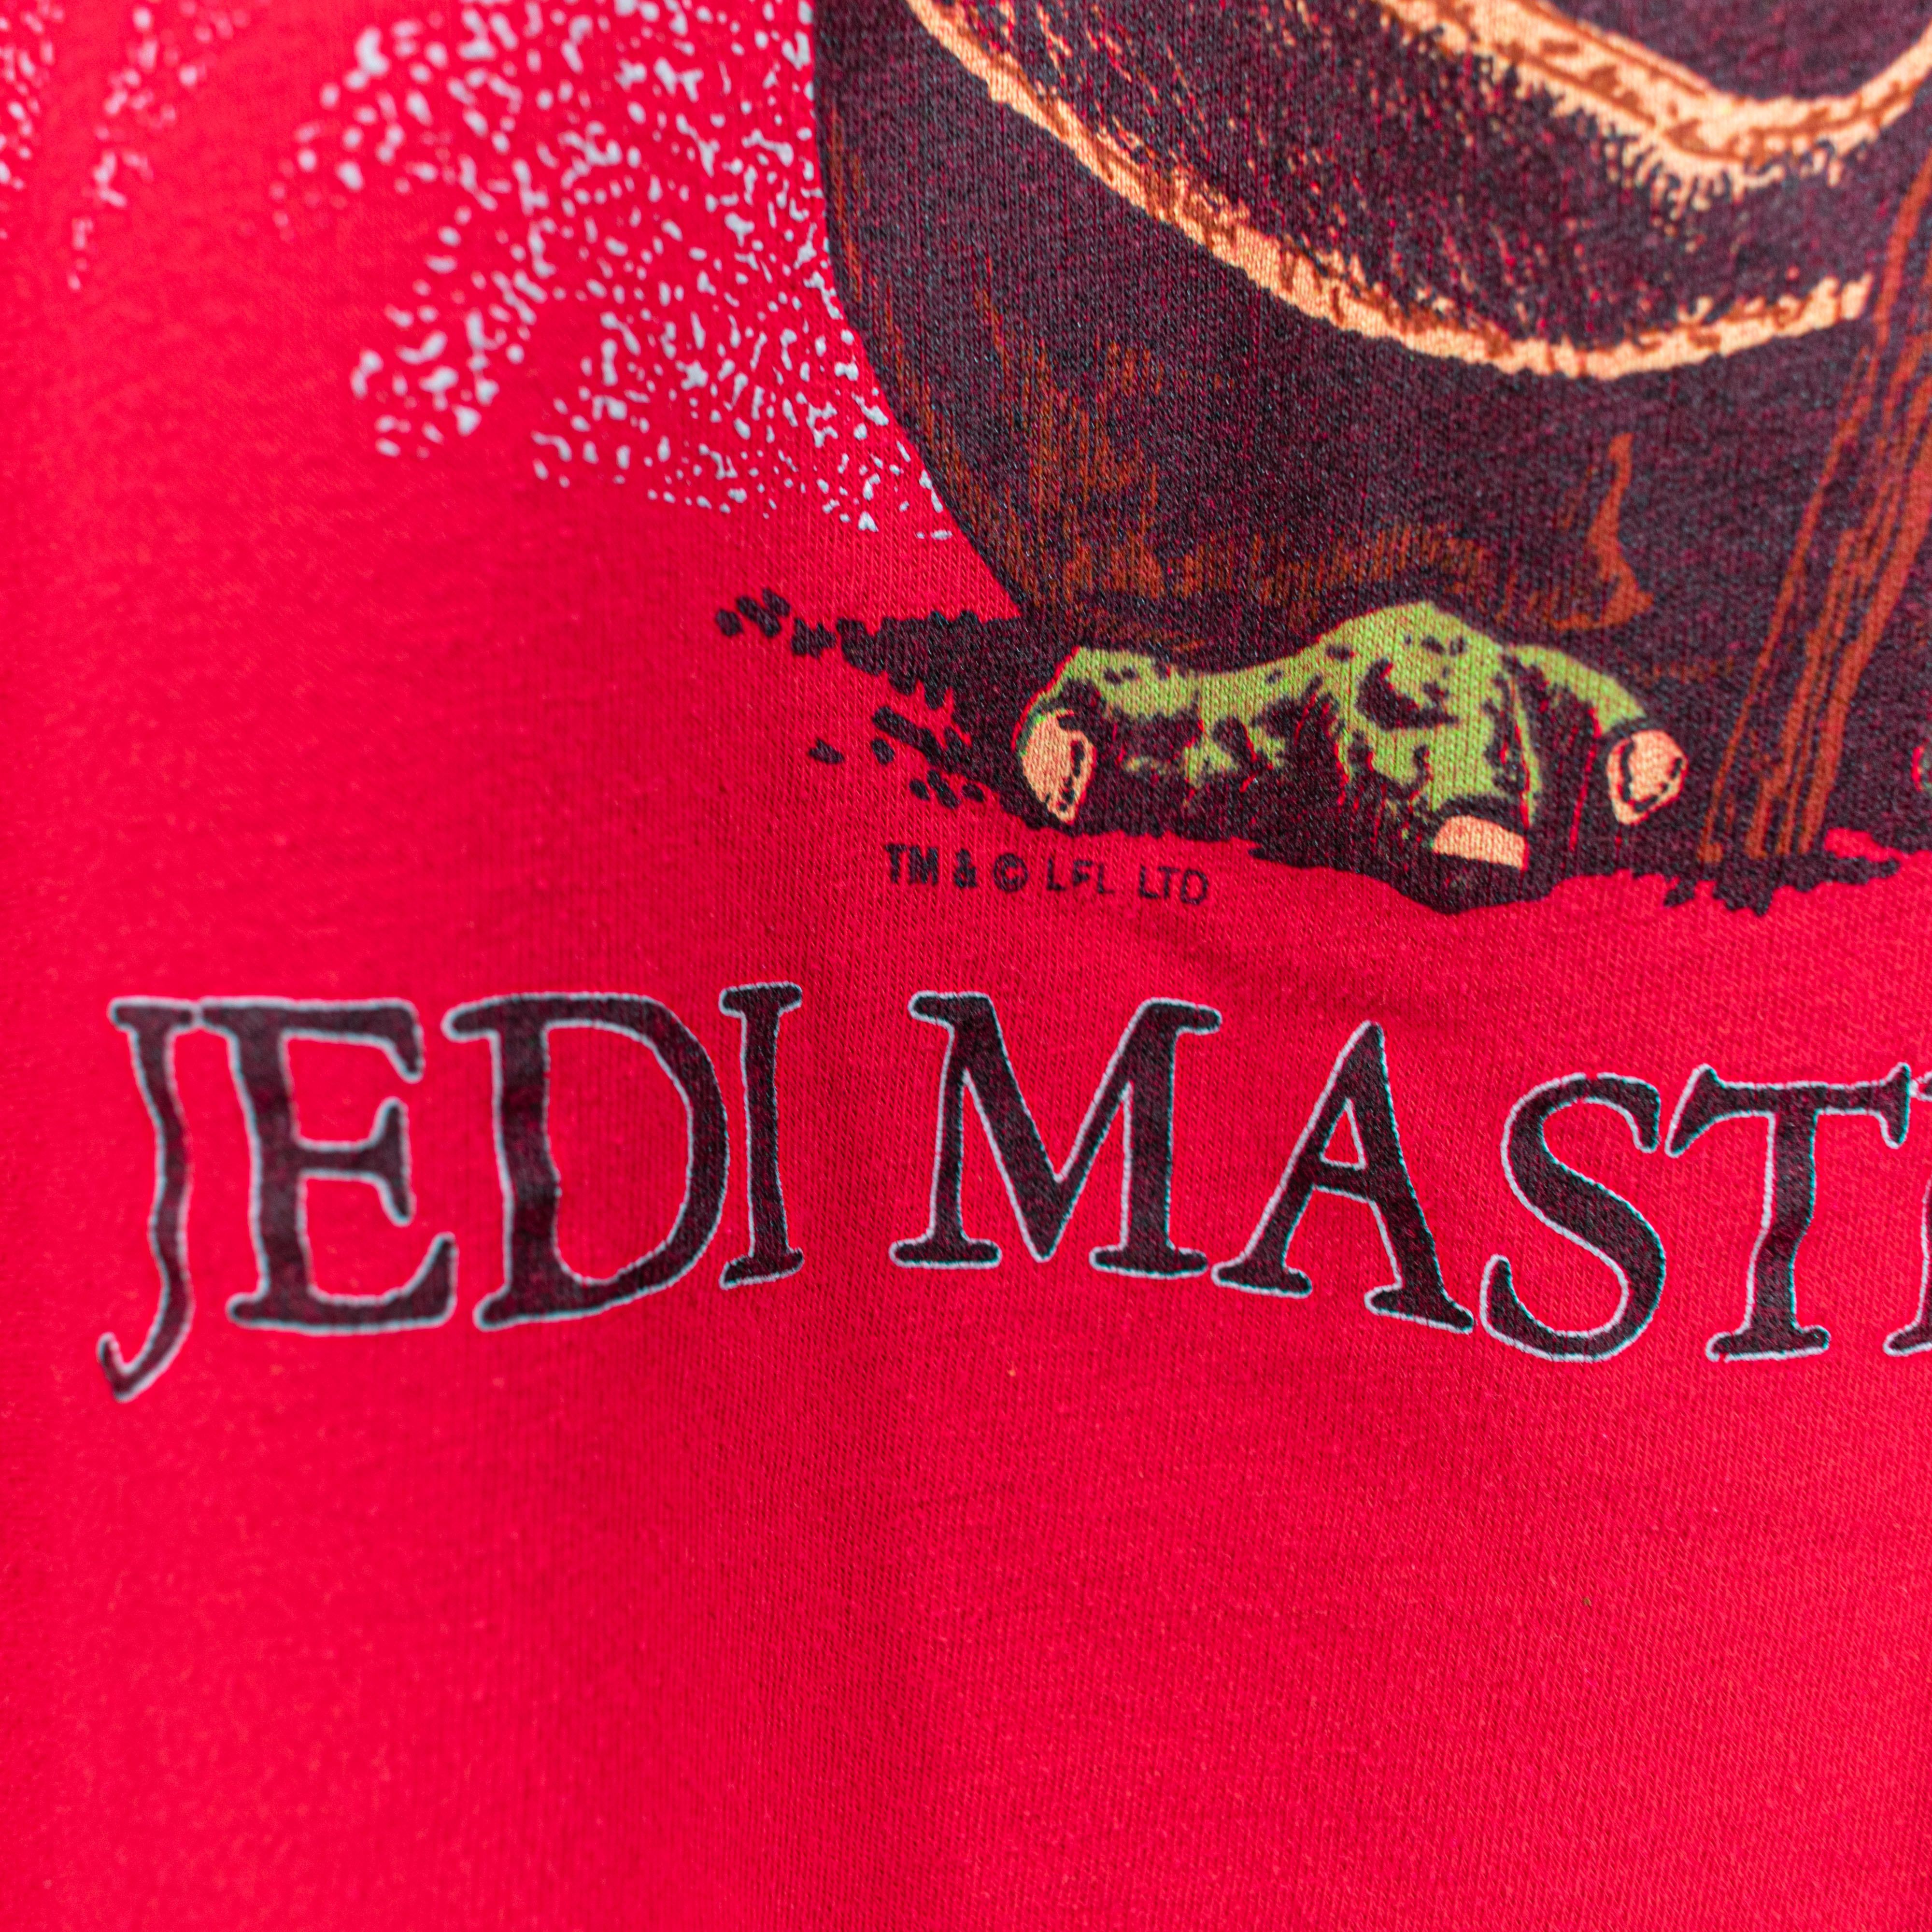 Vintage Star Wars Jedi Master Yoda T-Shirt VTG Artex George Lucas Size US L / EU 52-54 / 3 - 5 Thumbnail